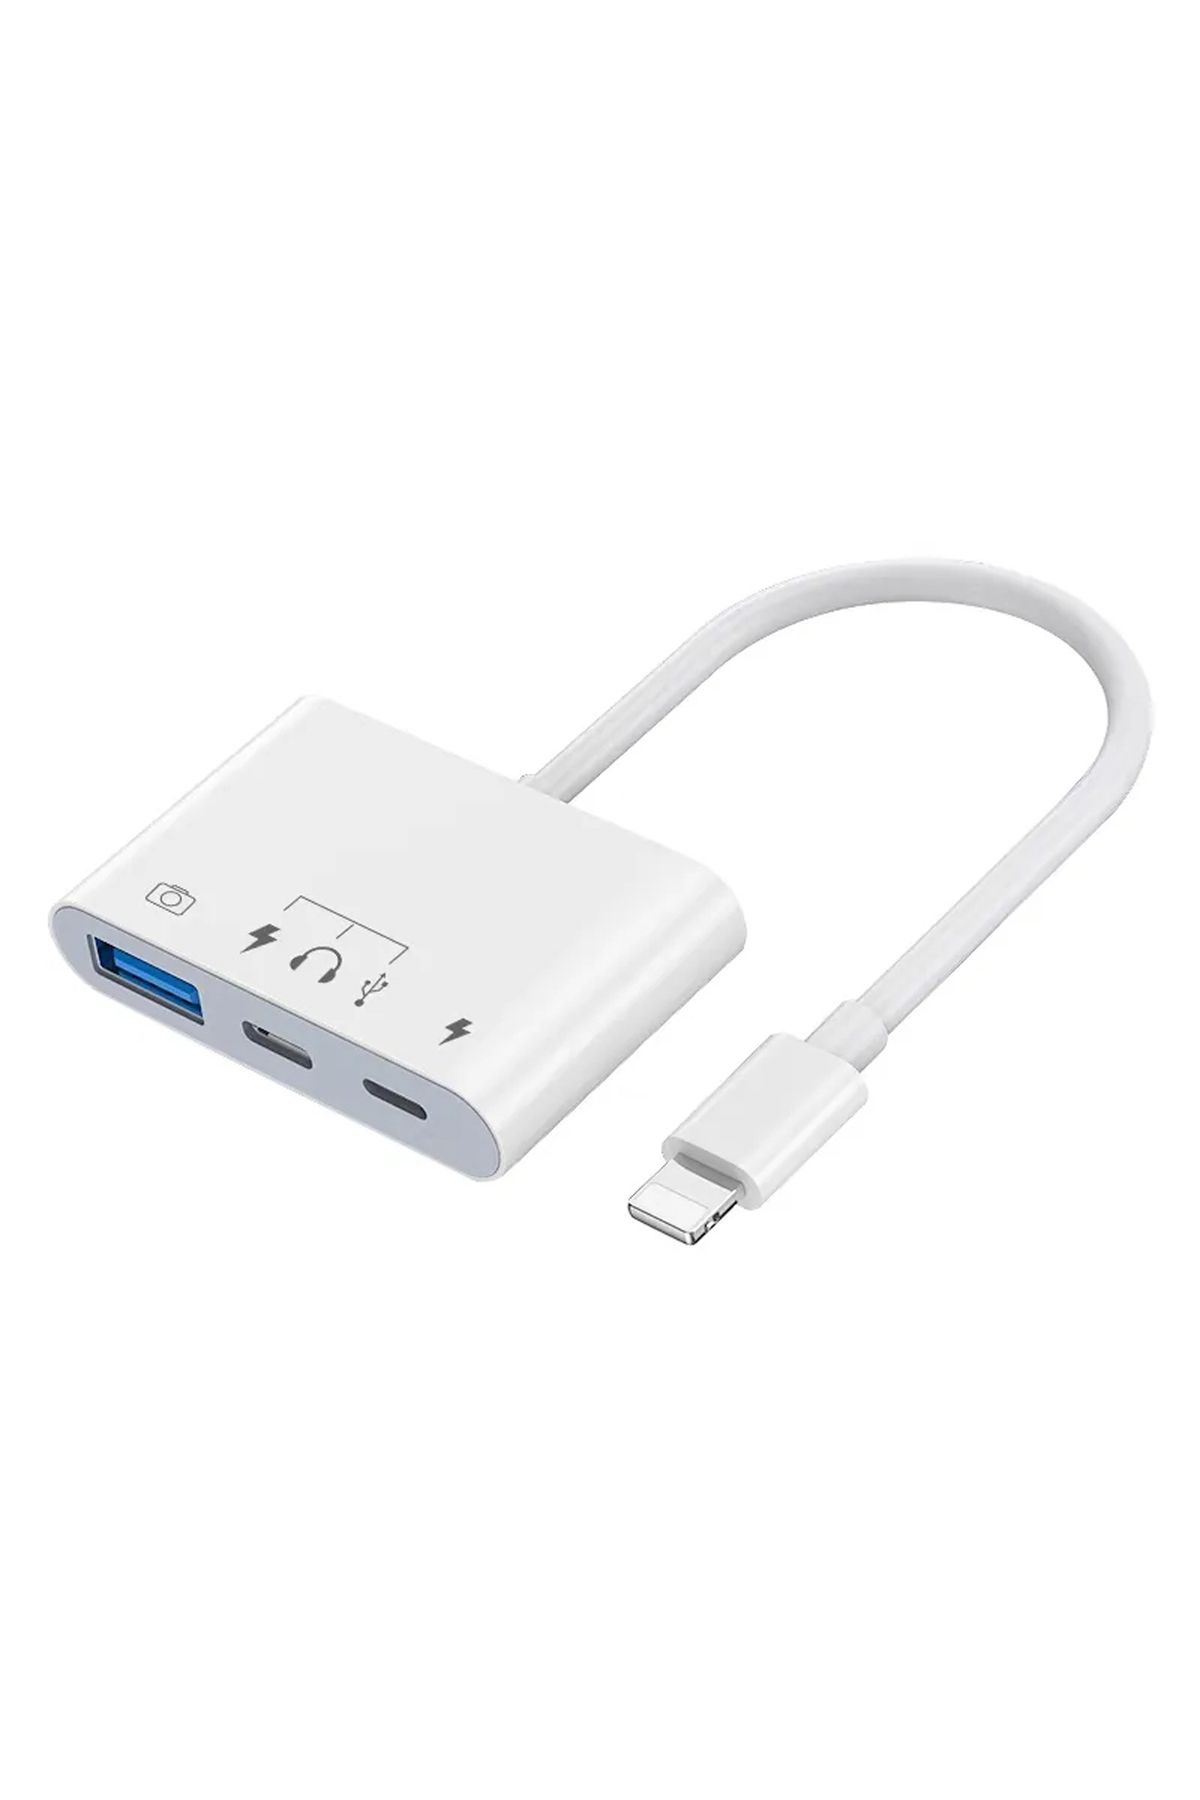 Microcase Lightning to Type C USB iphone iPad Uyumlu Bağlantı Şarj ve Kamera Adaptörü - AL4134